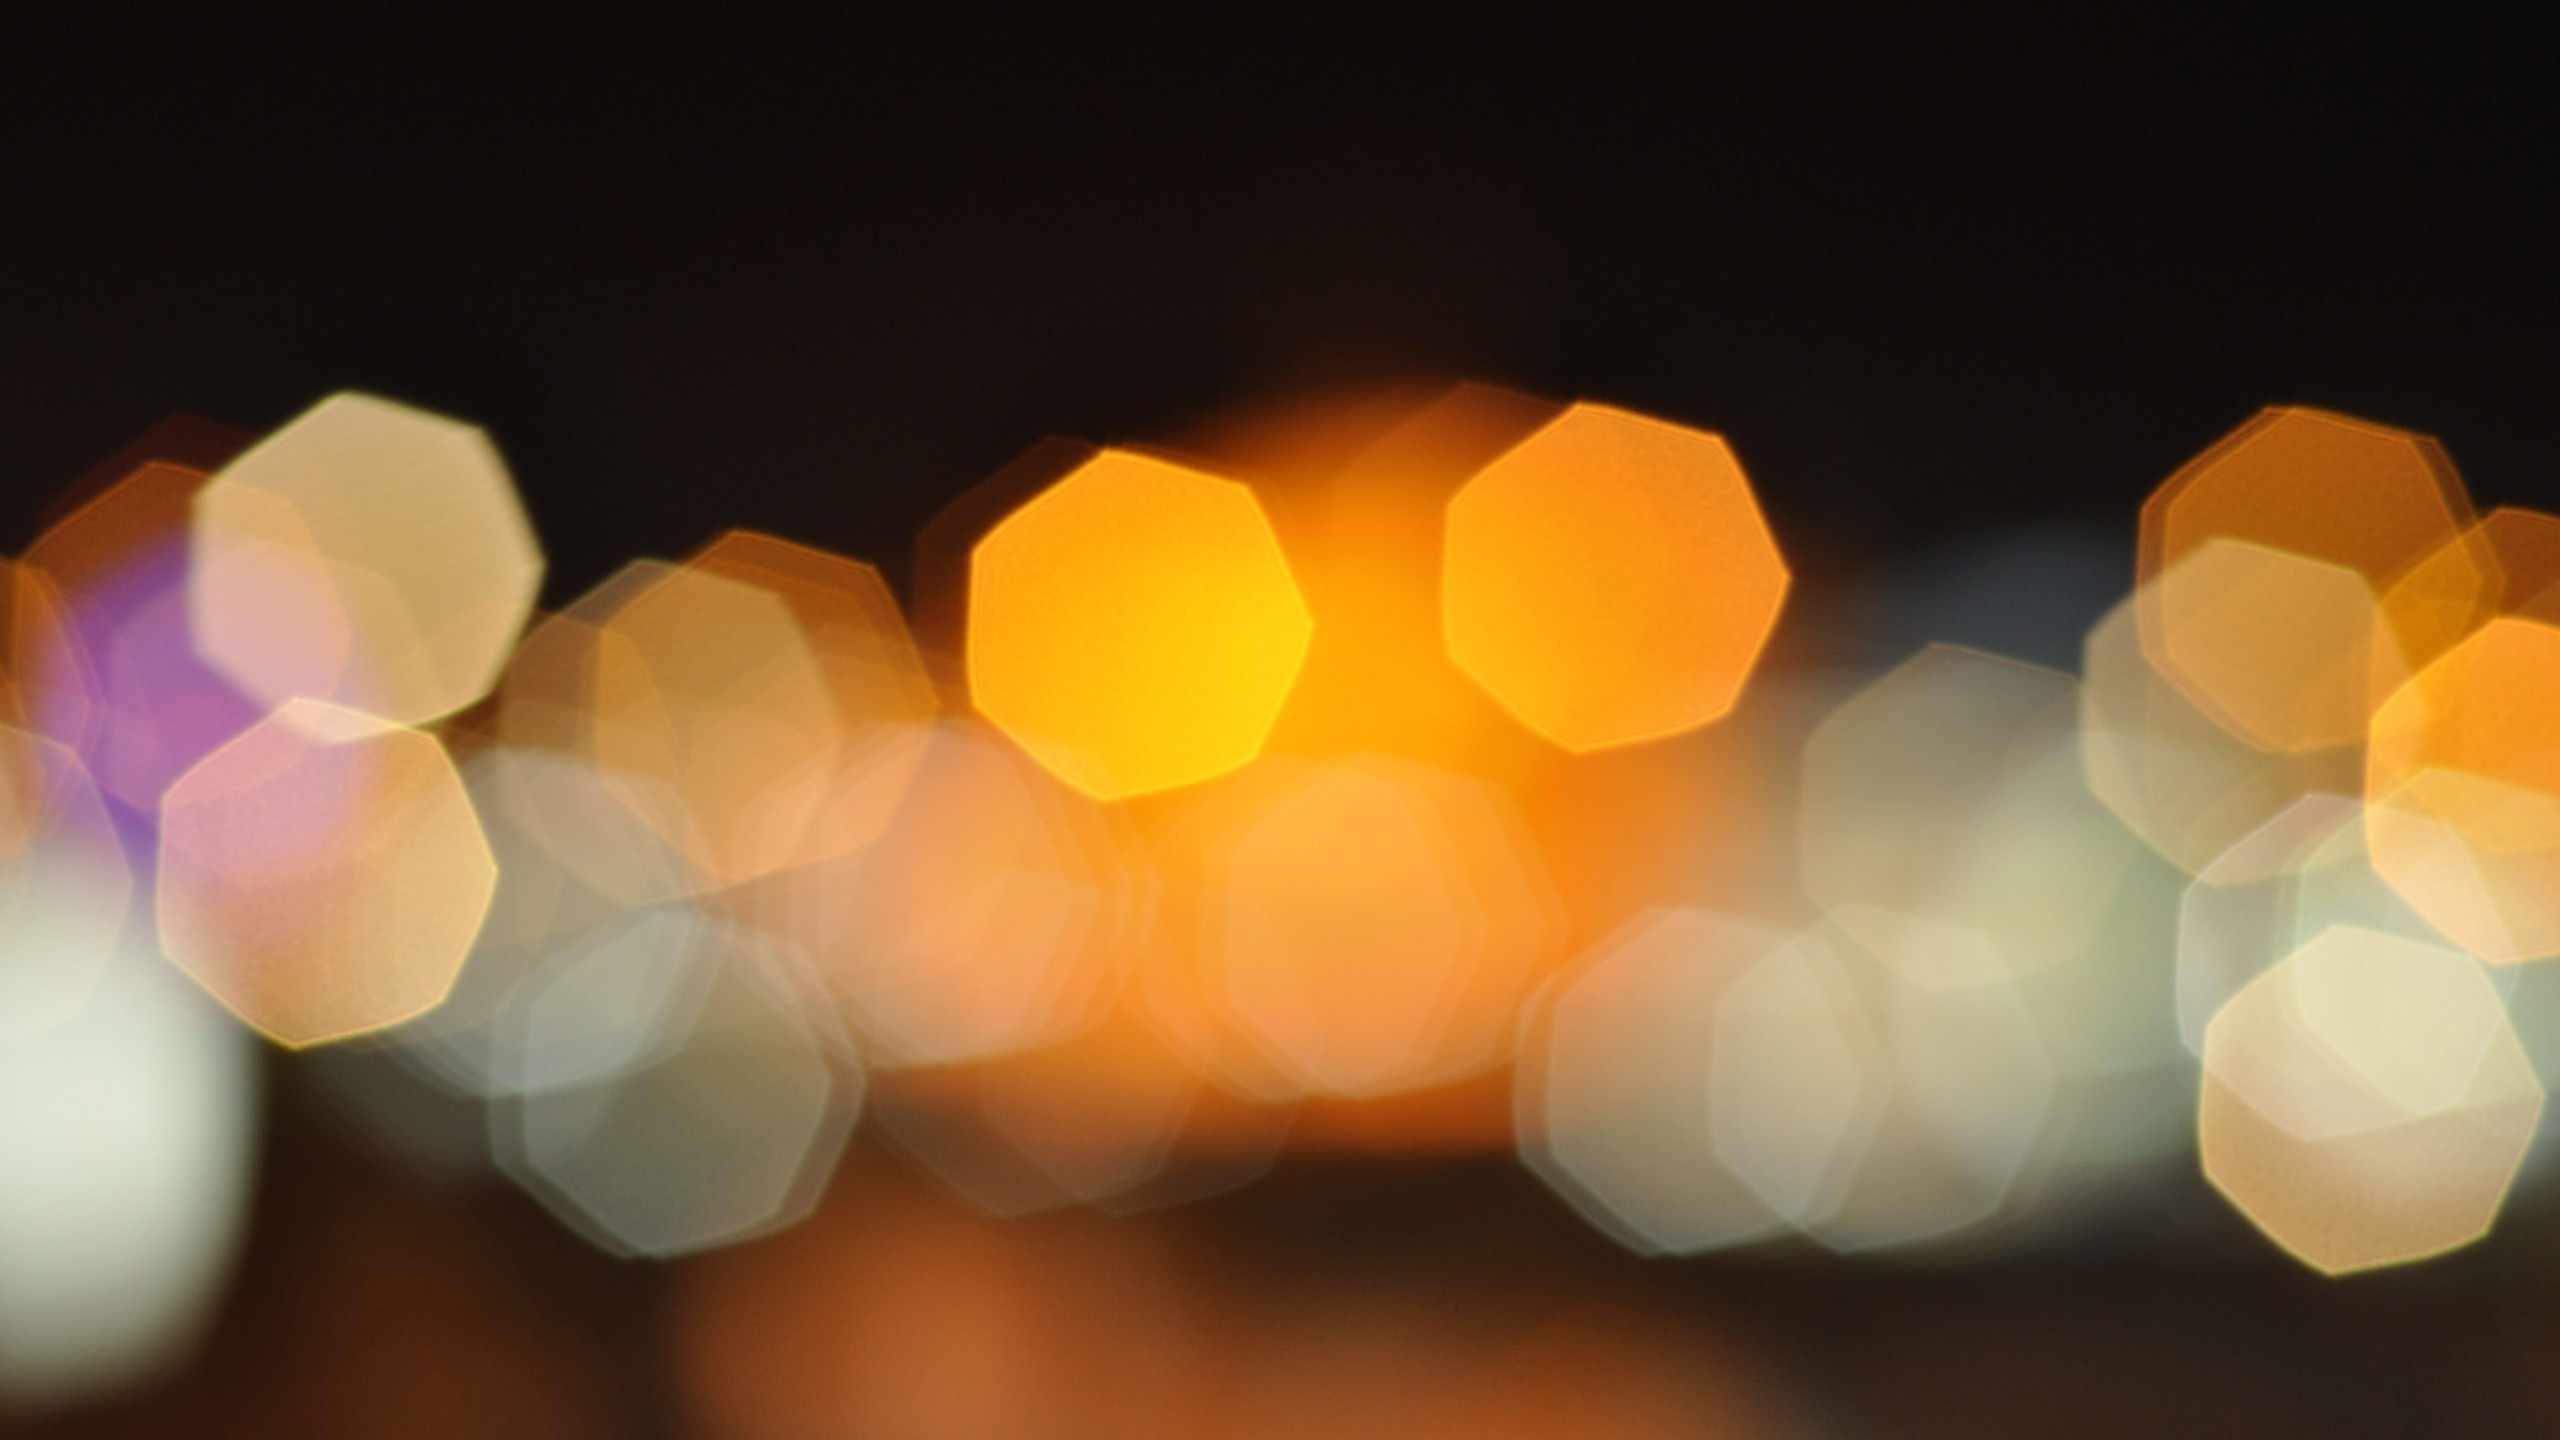 Blurred City Lights Wallpaper for Desktop 2560x1440